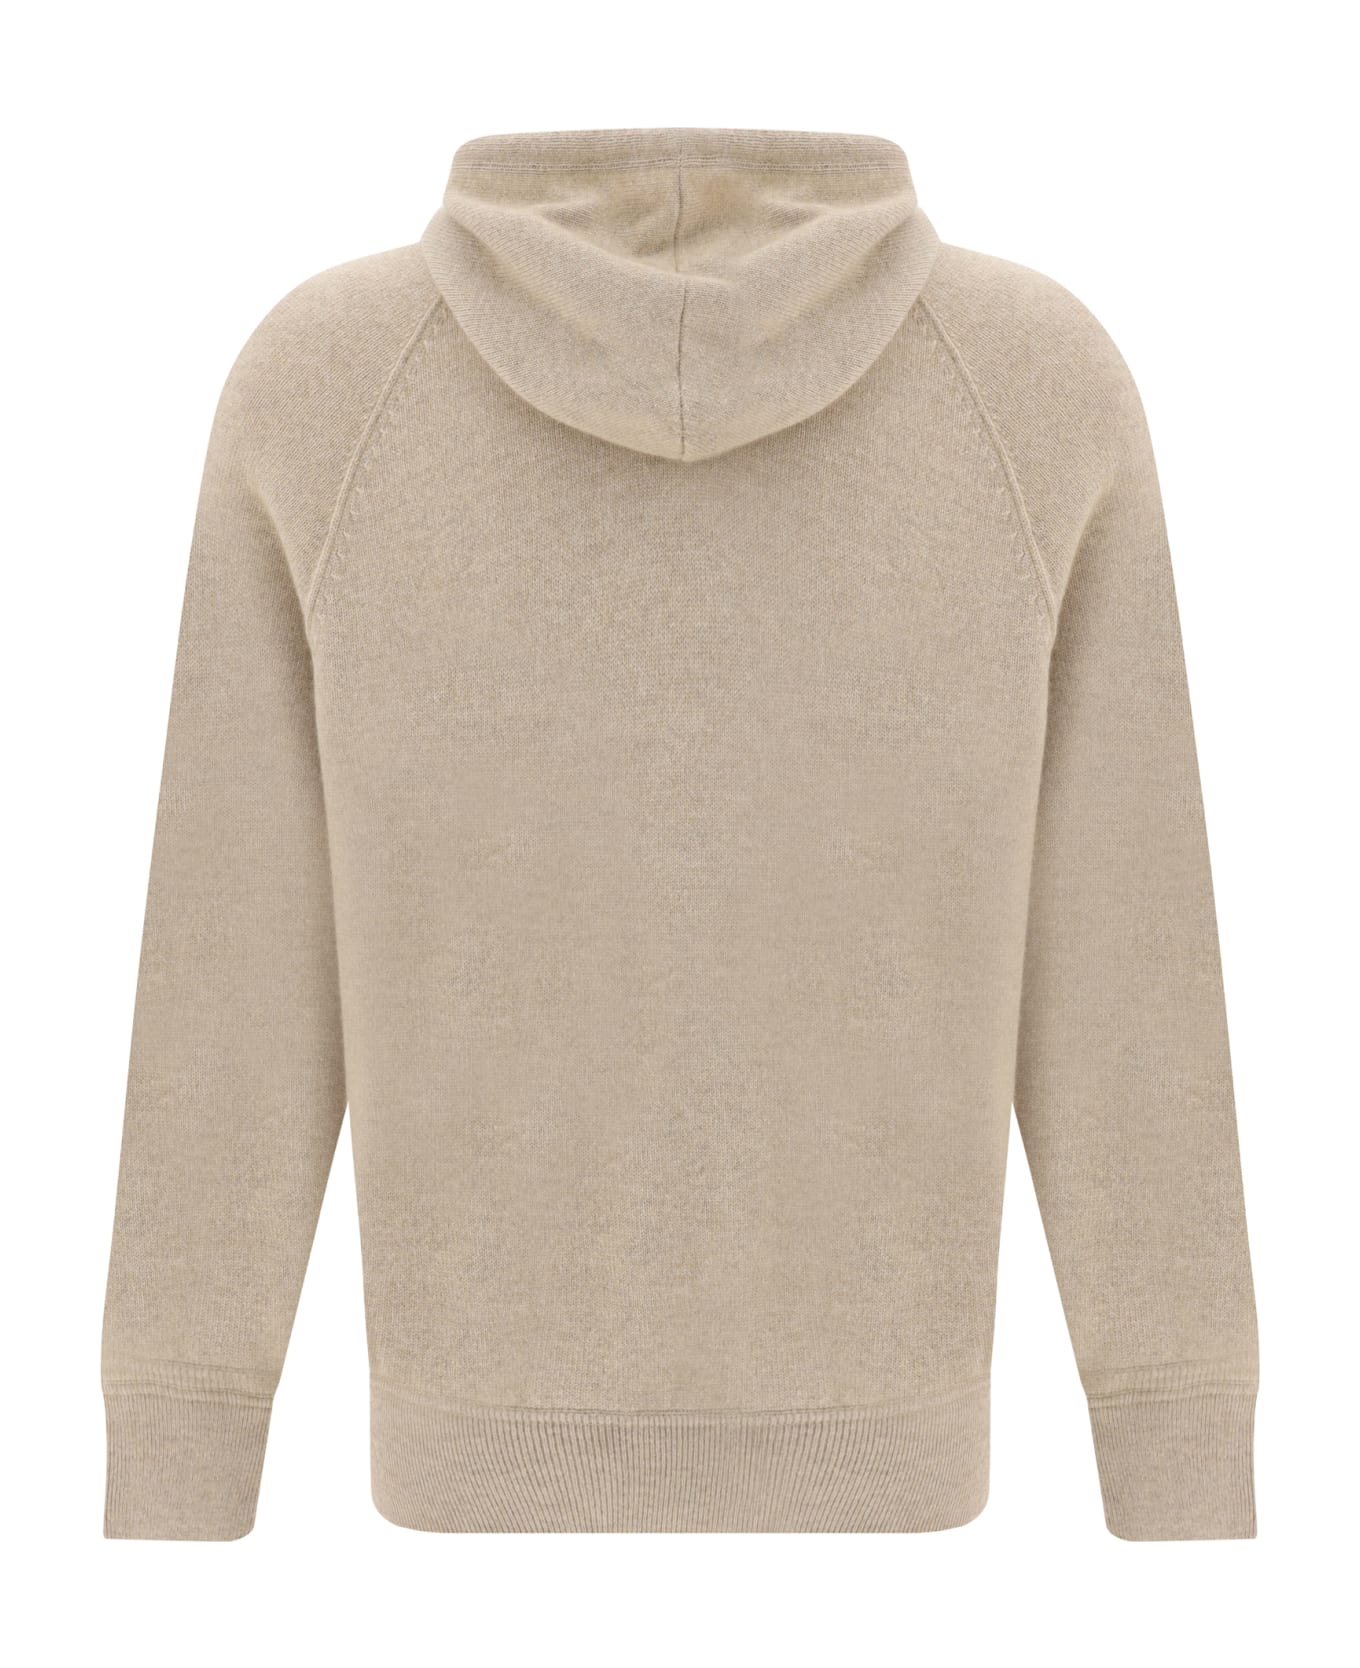 Brunello Cucinelli Cashmere Hooded Sweater - Beige